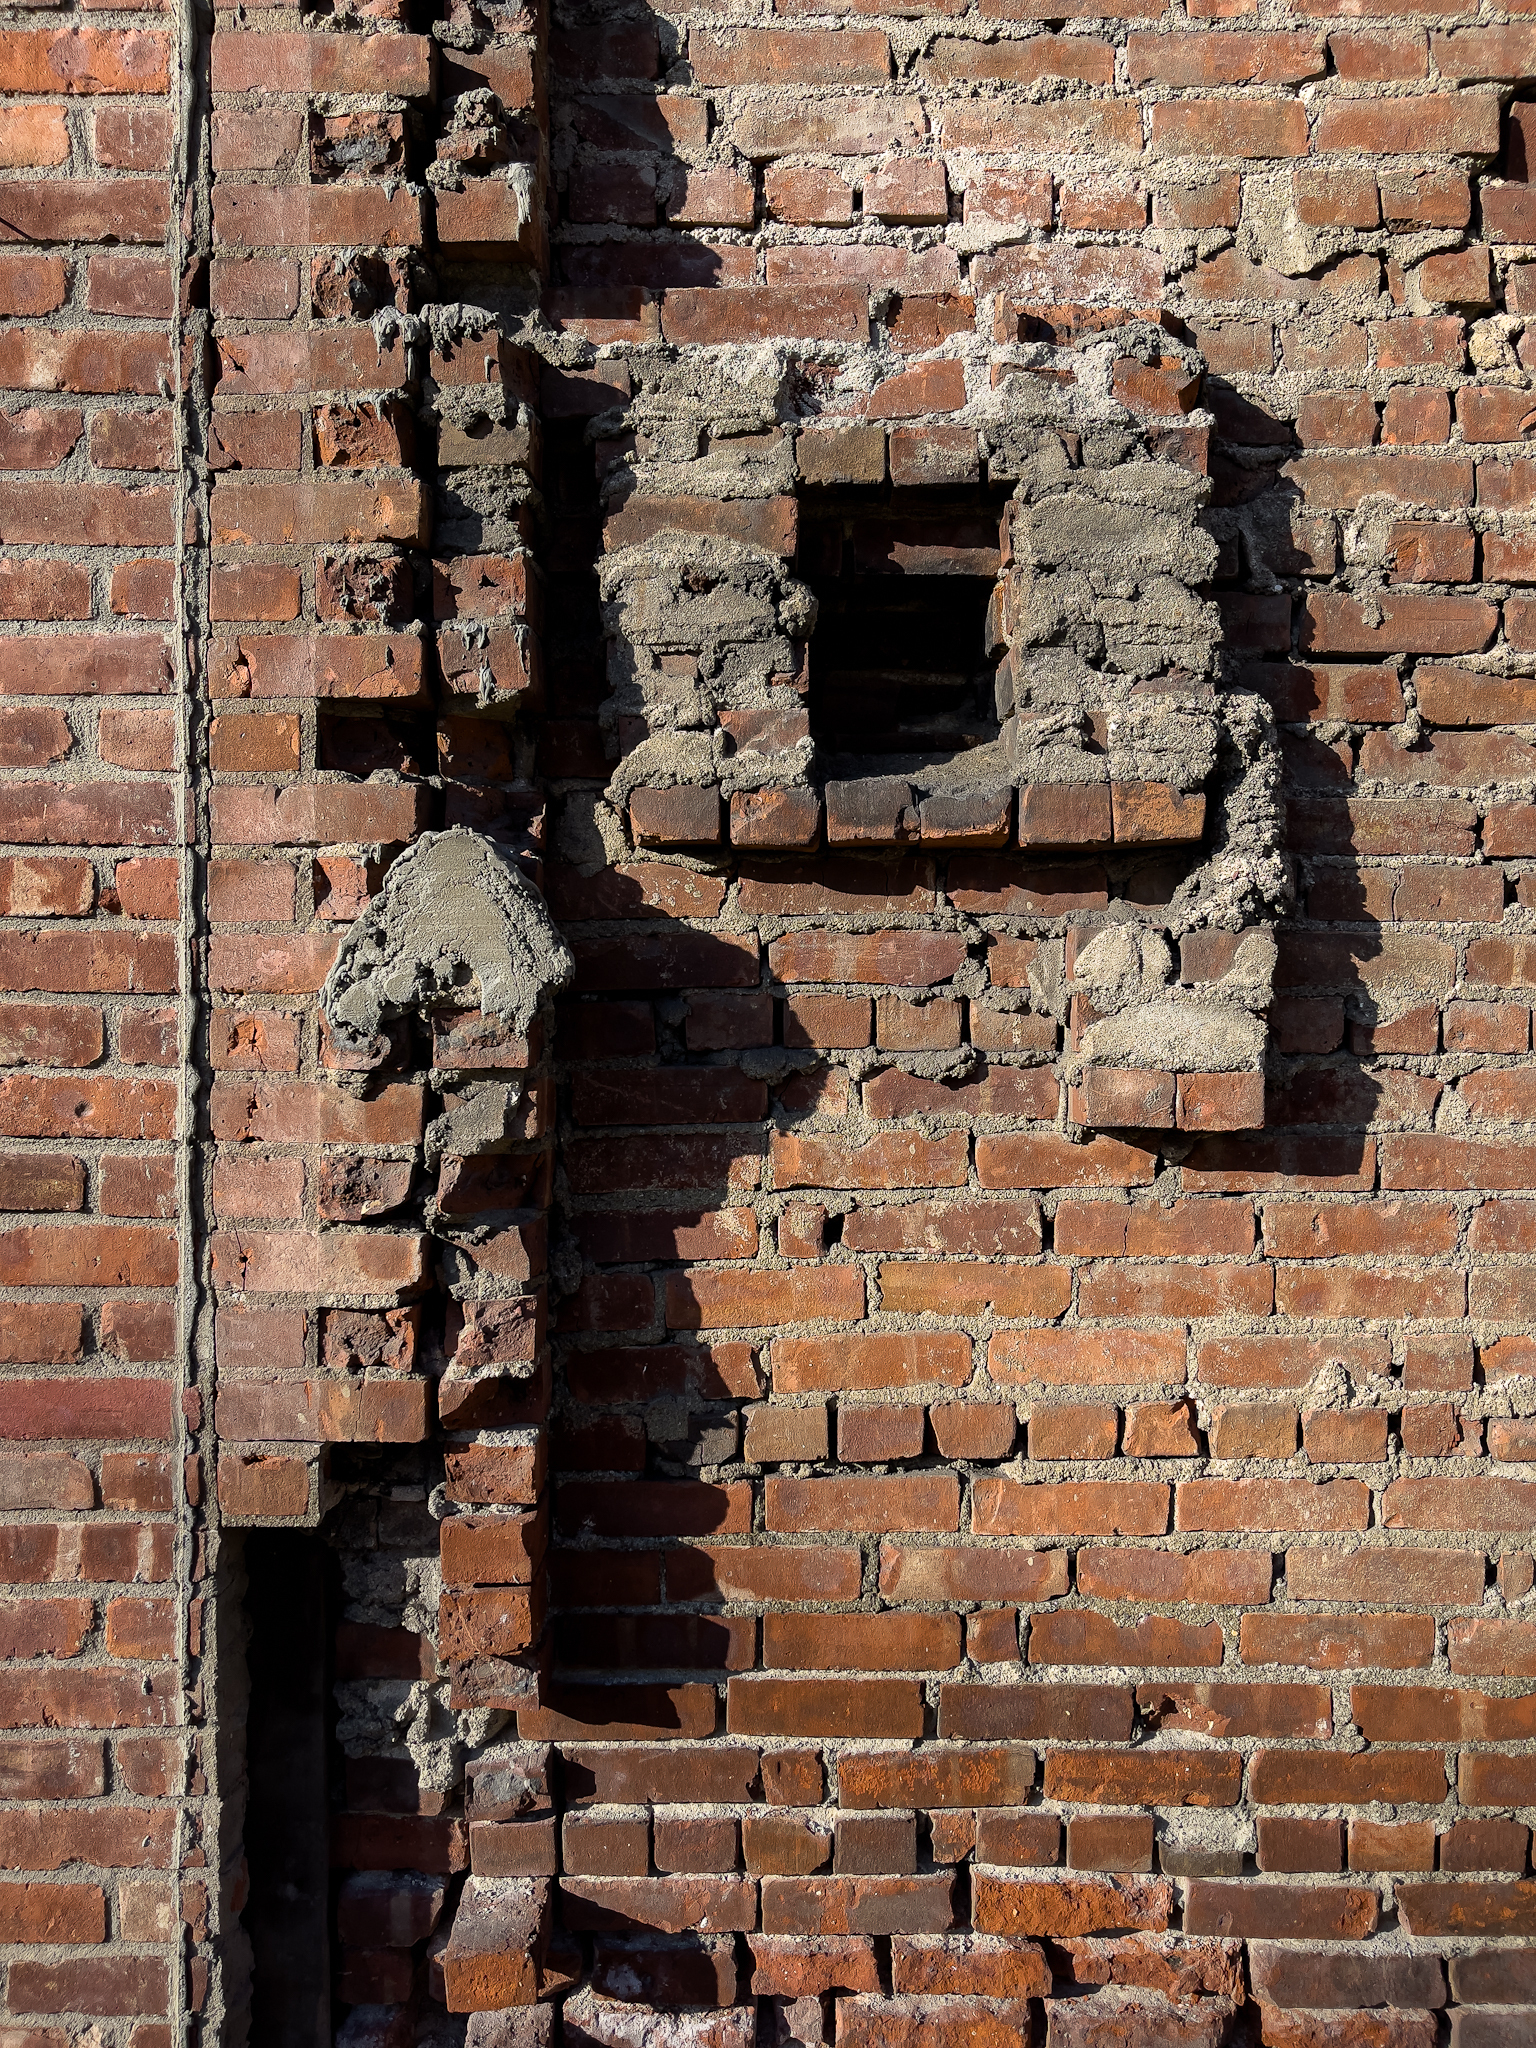 Brick wall with brick protrusions casting shadows.